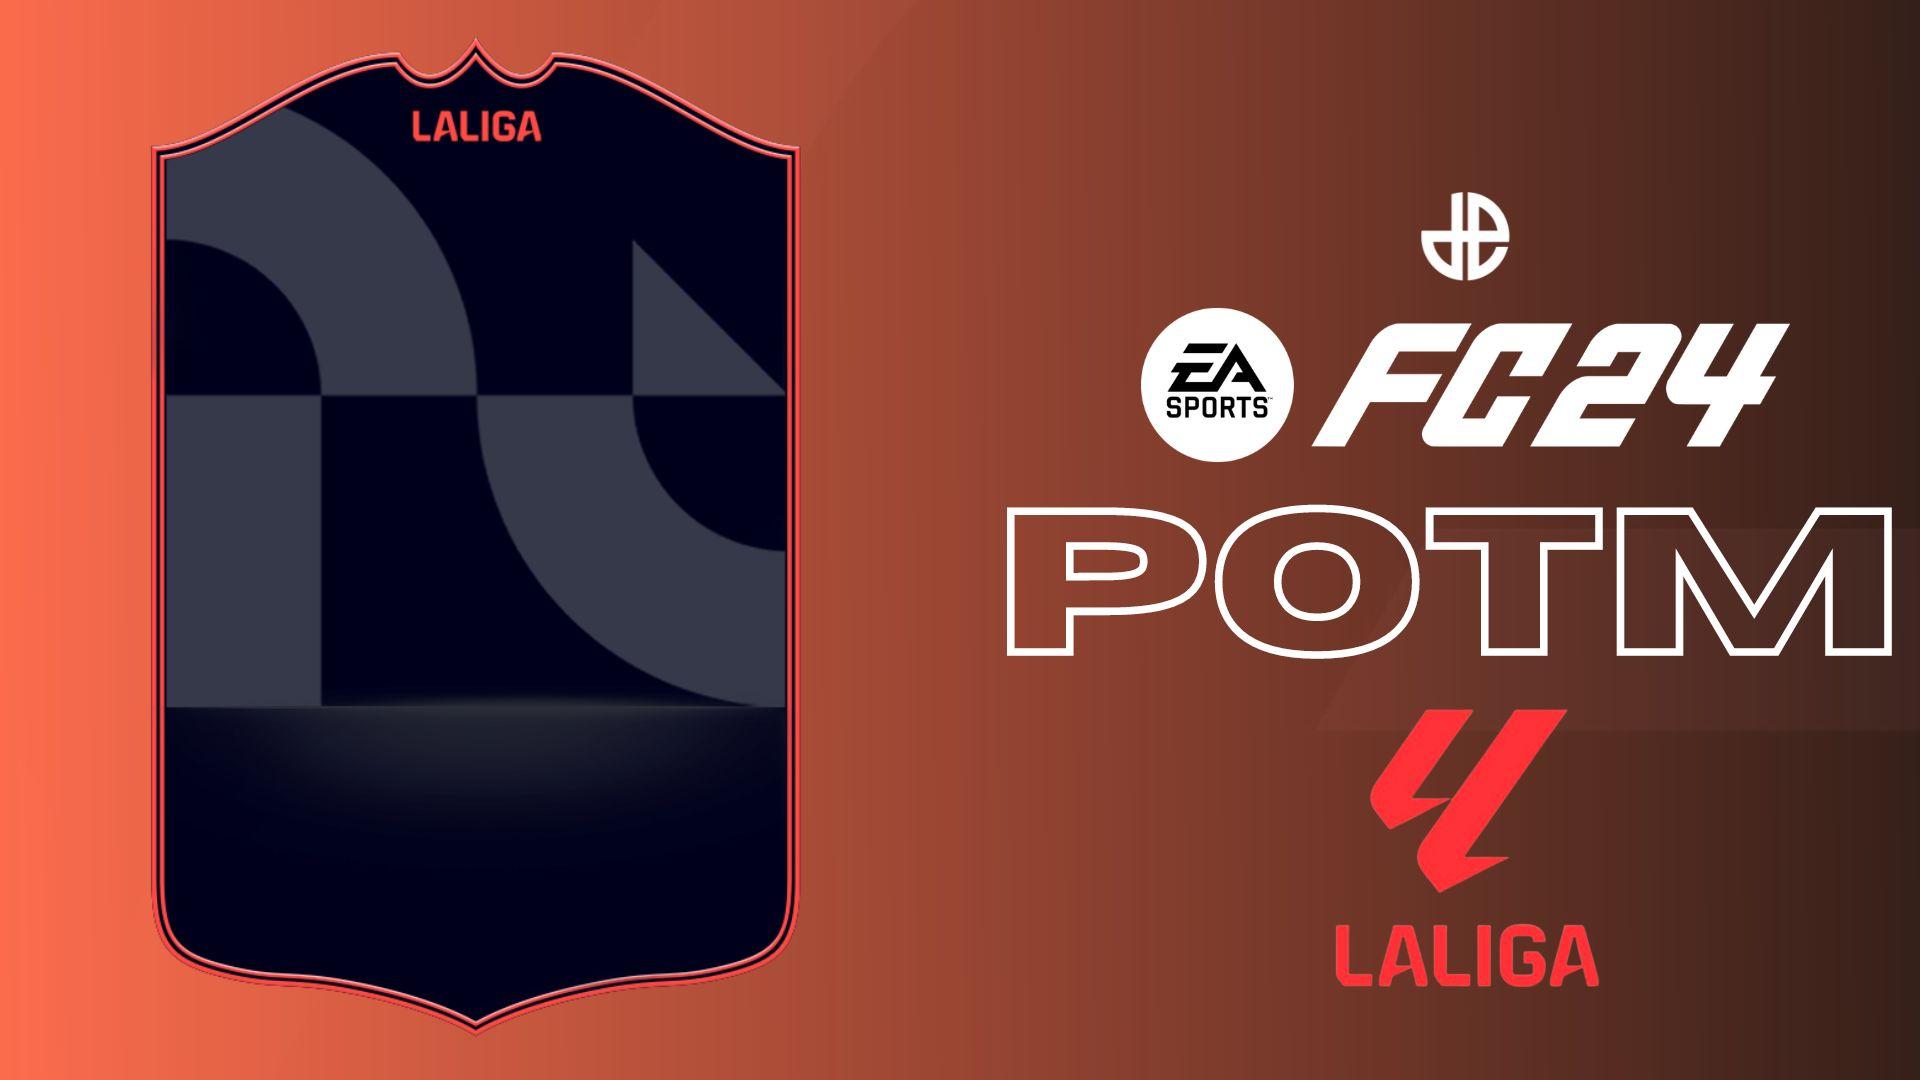 EA SPORTS FC LALIGA POTM card and text with league logo